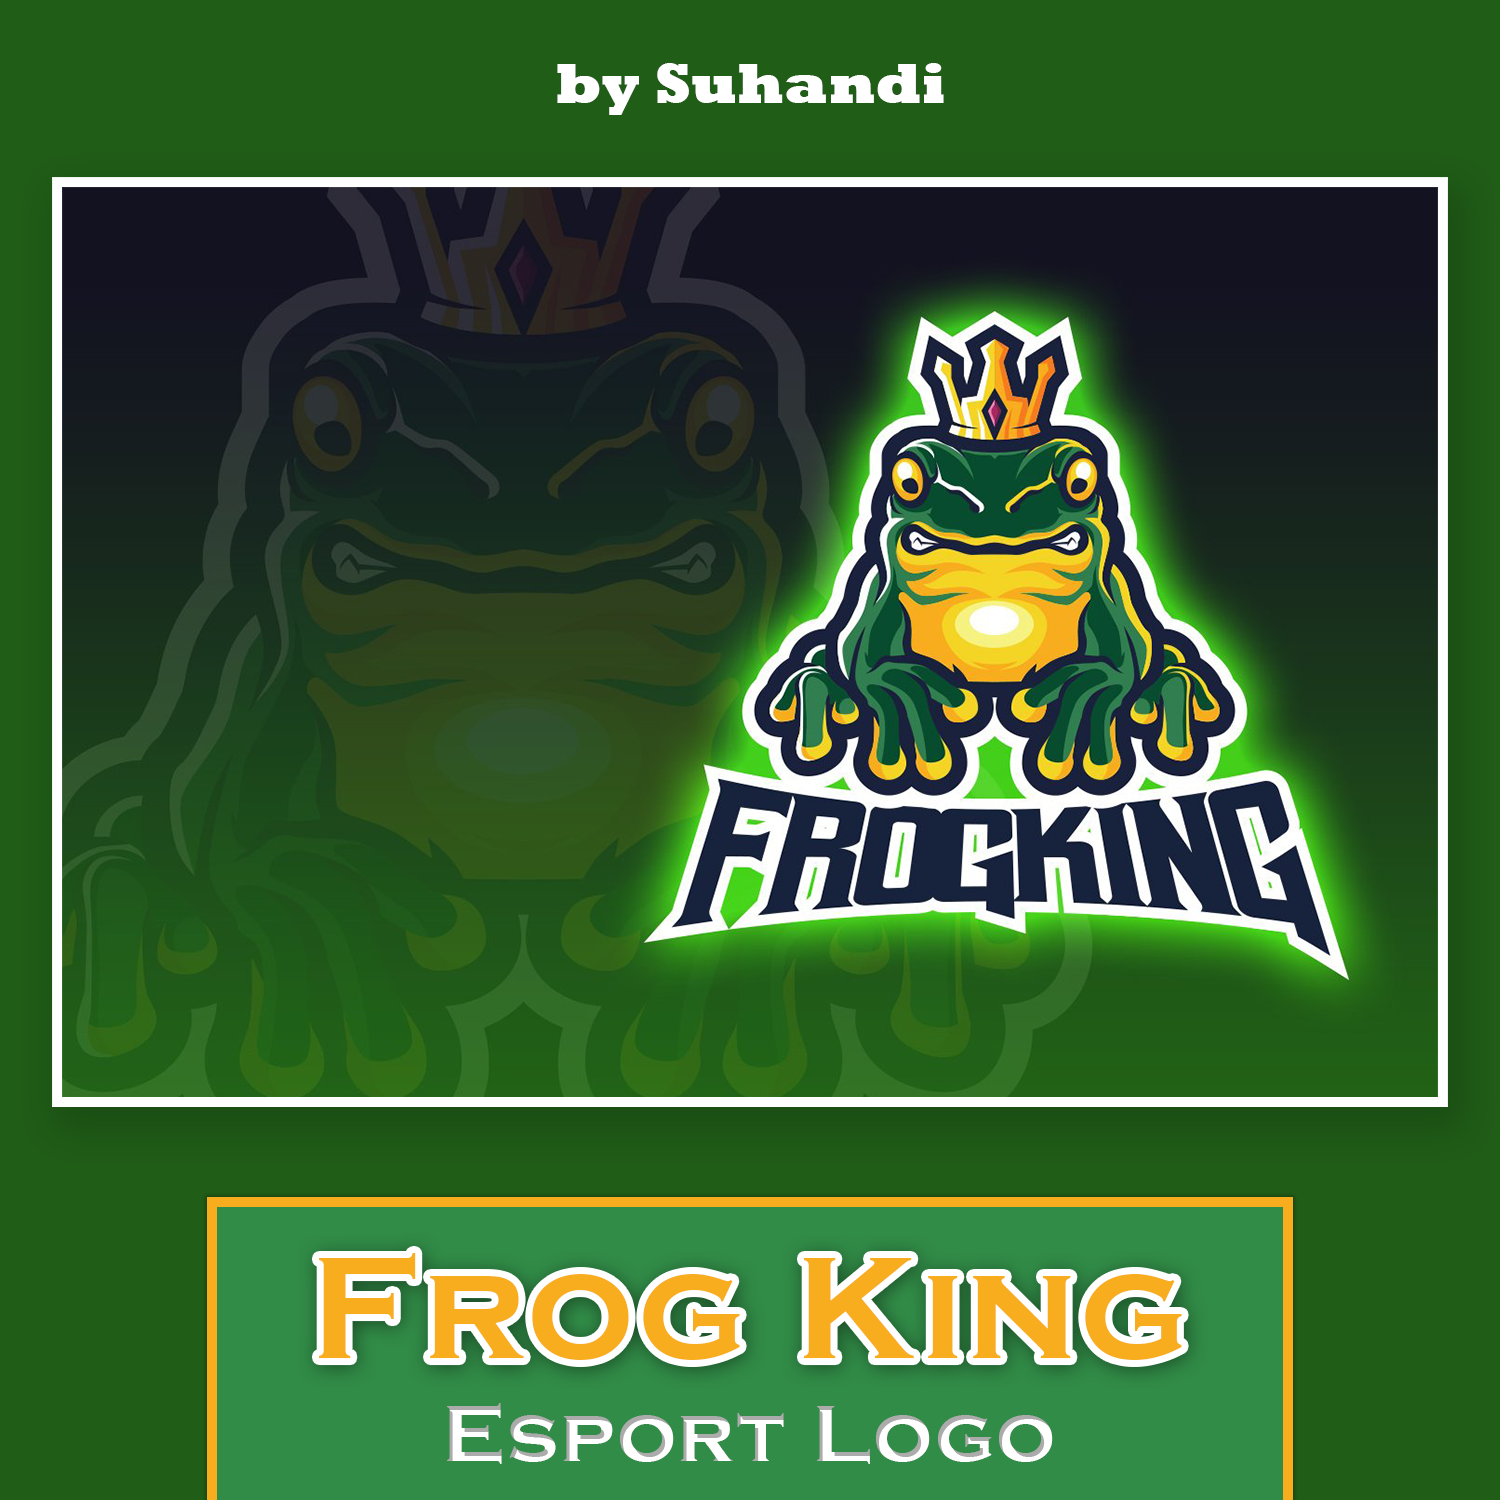 Frog King Esport Logo cover.